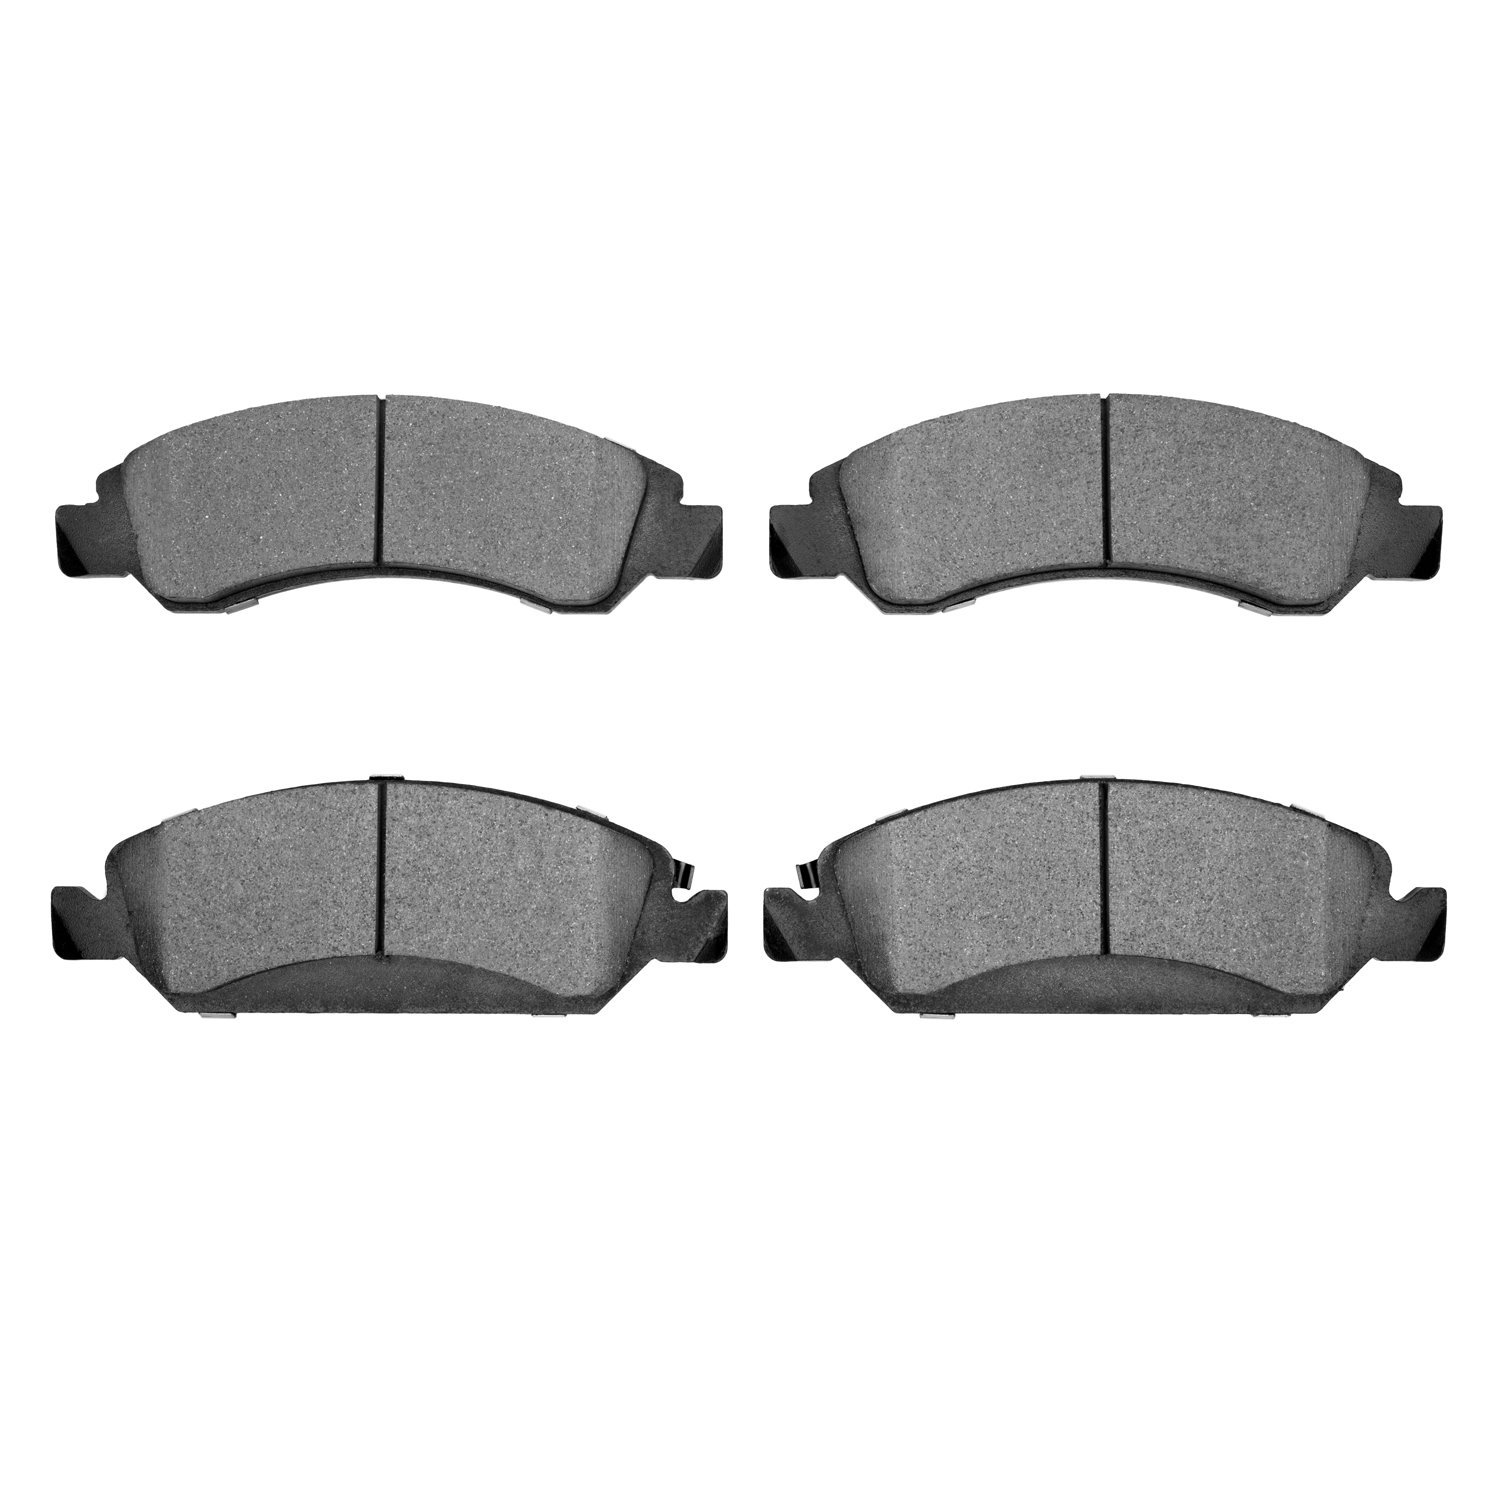 1310-1363-00 3000-Series Ceramic Brake Pads, 2005-2020 GM, Position: Front